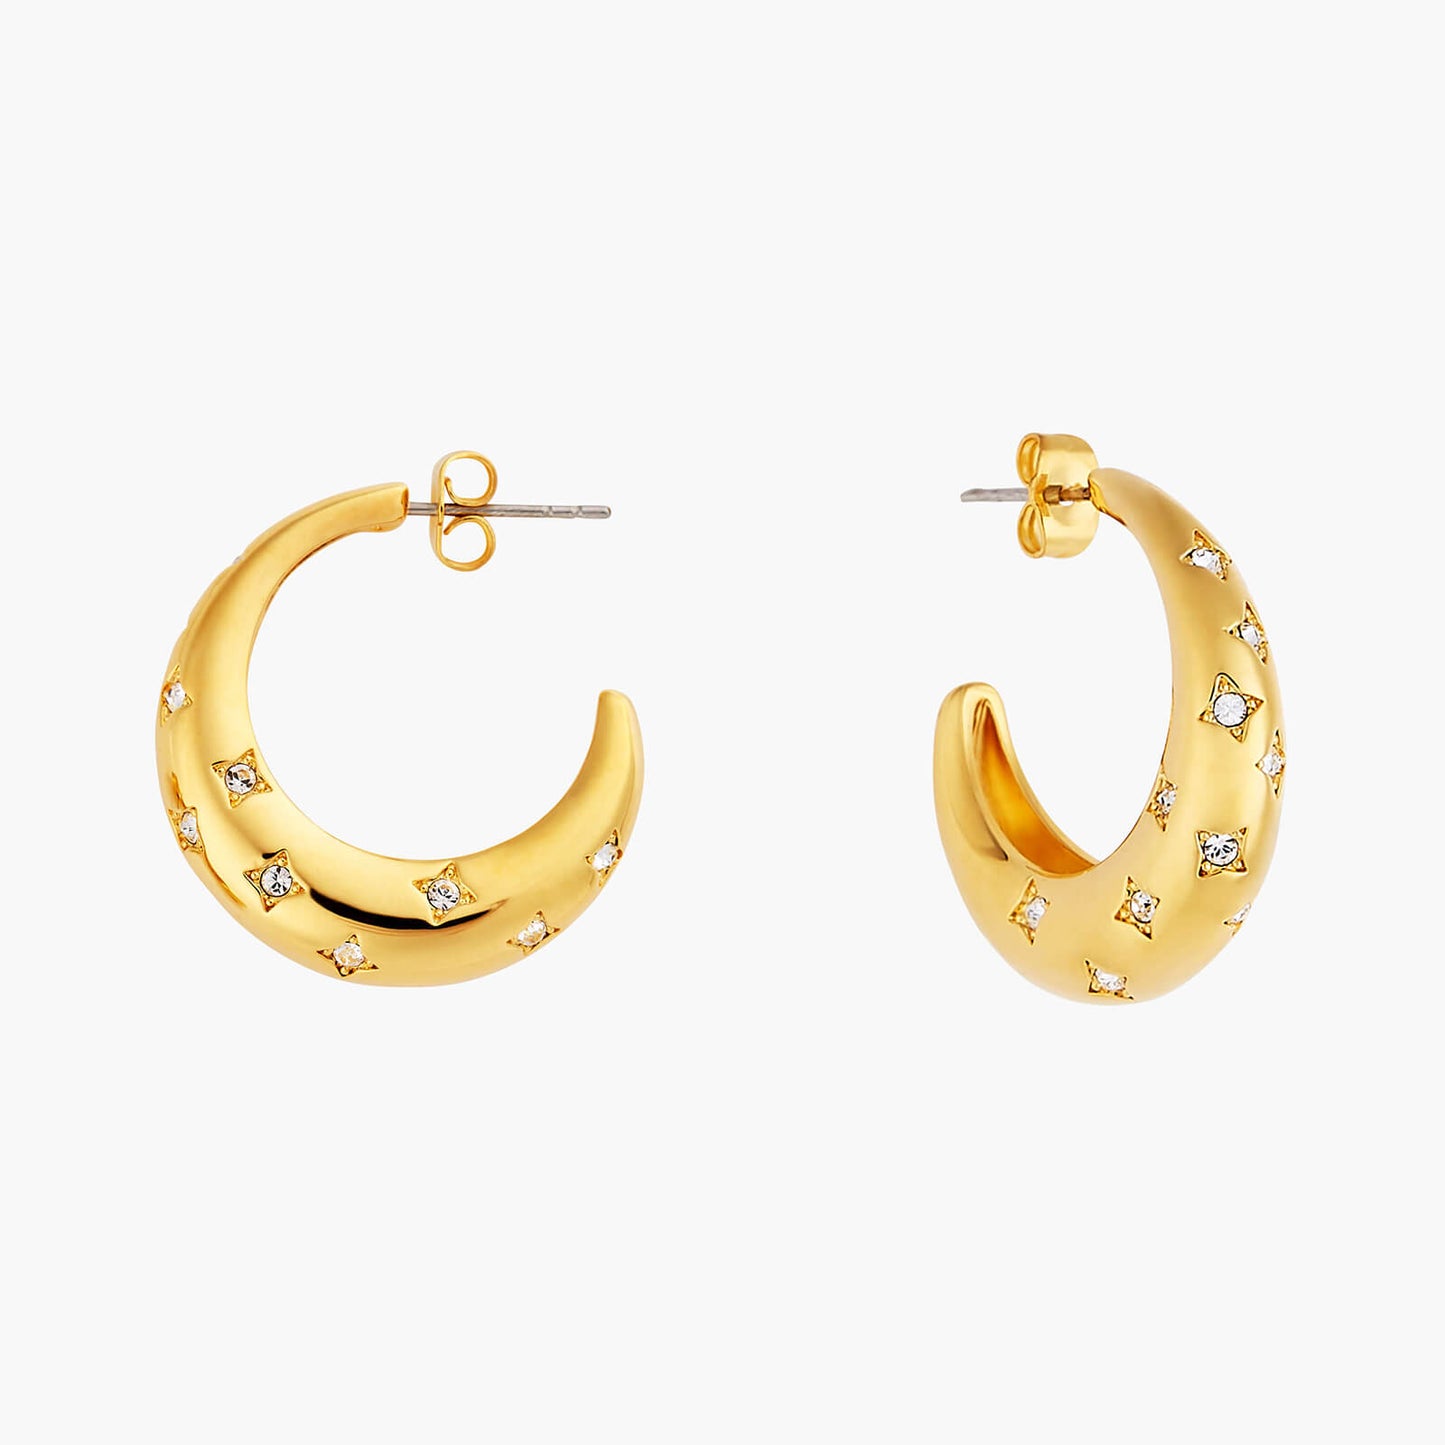 Milles Etoiles Earrings | AOMI1041